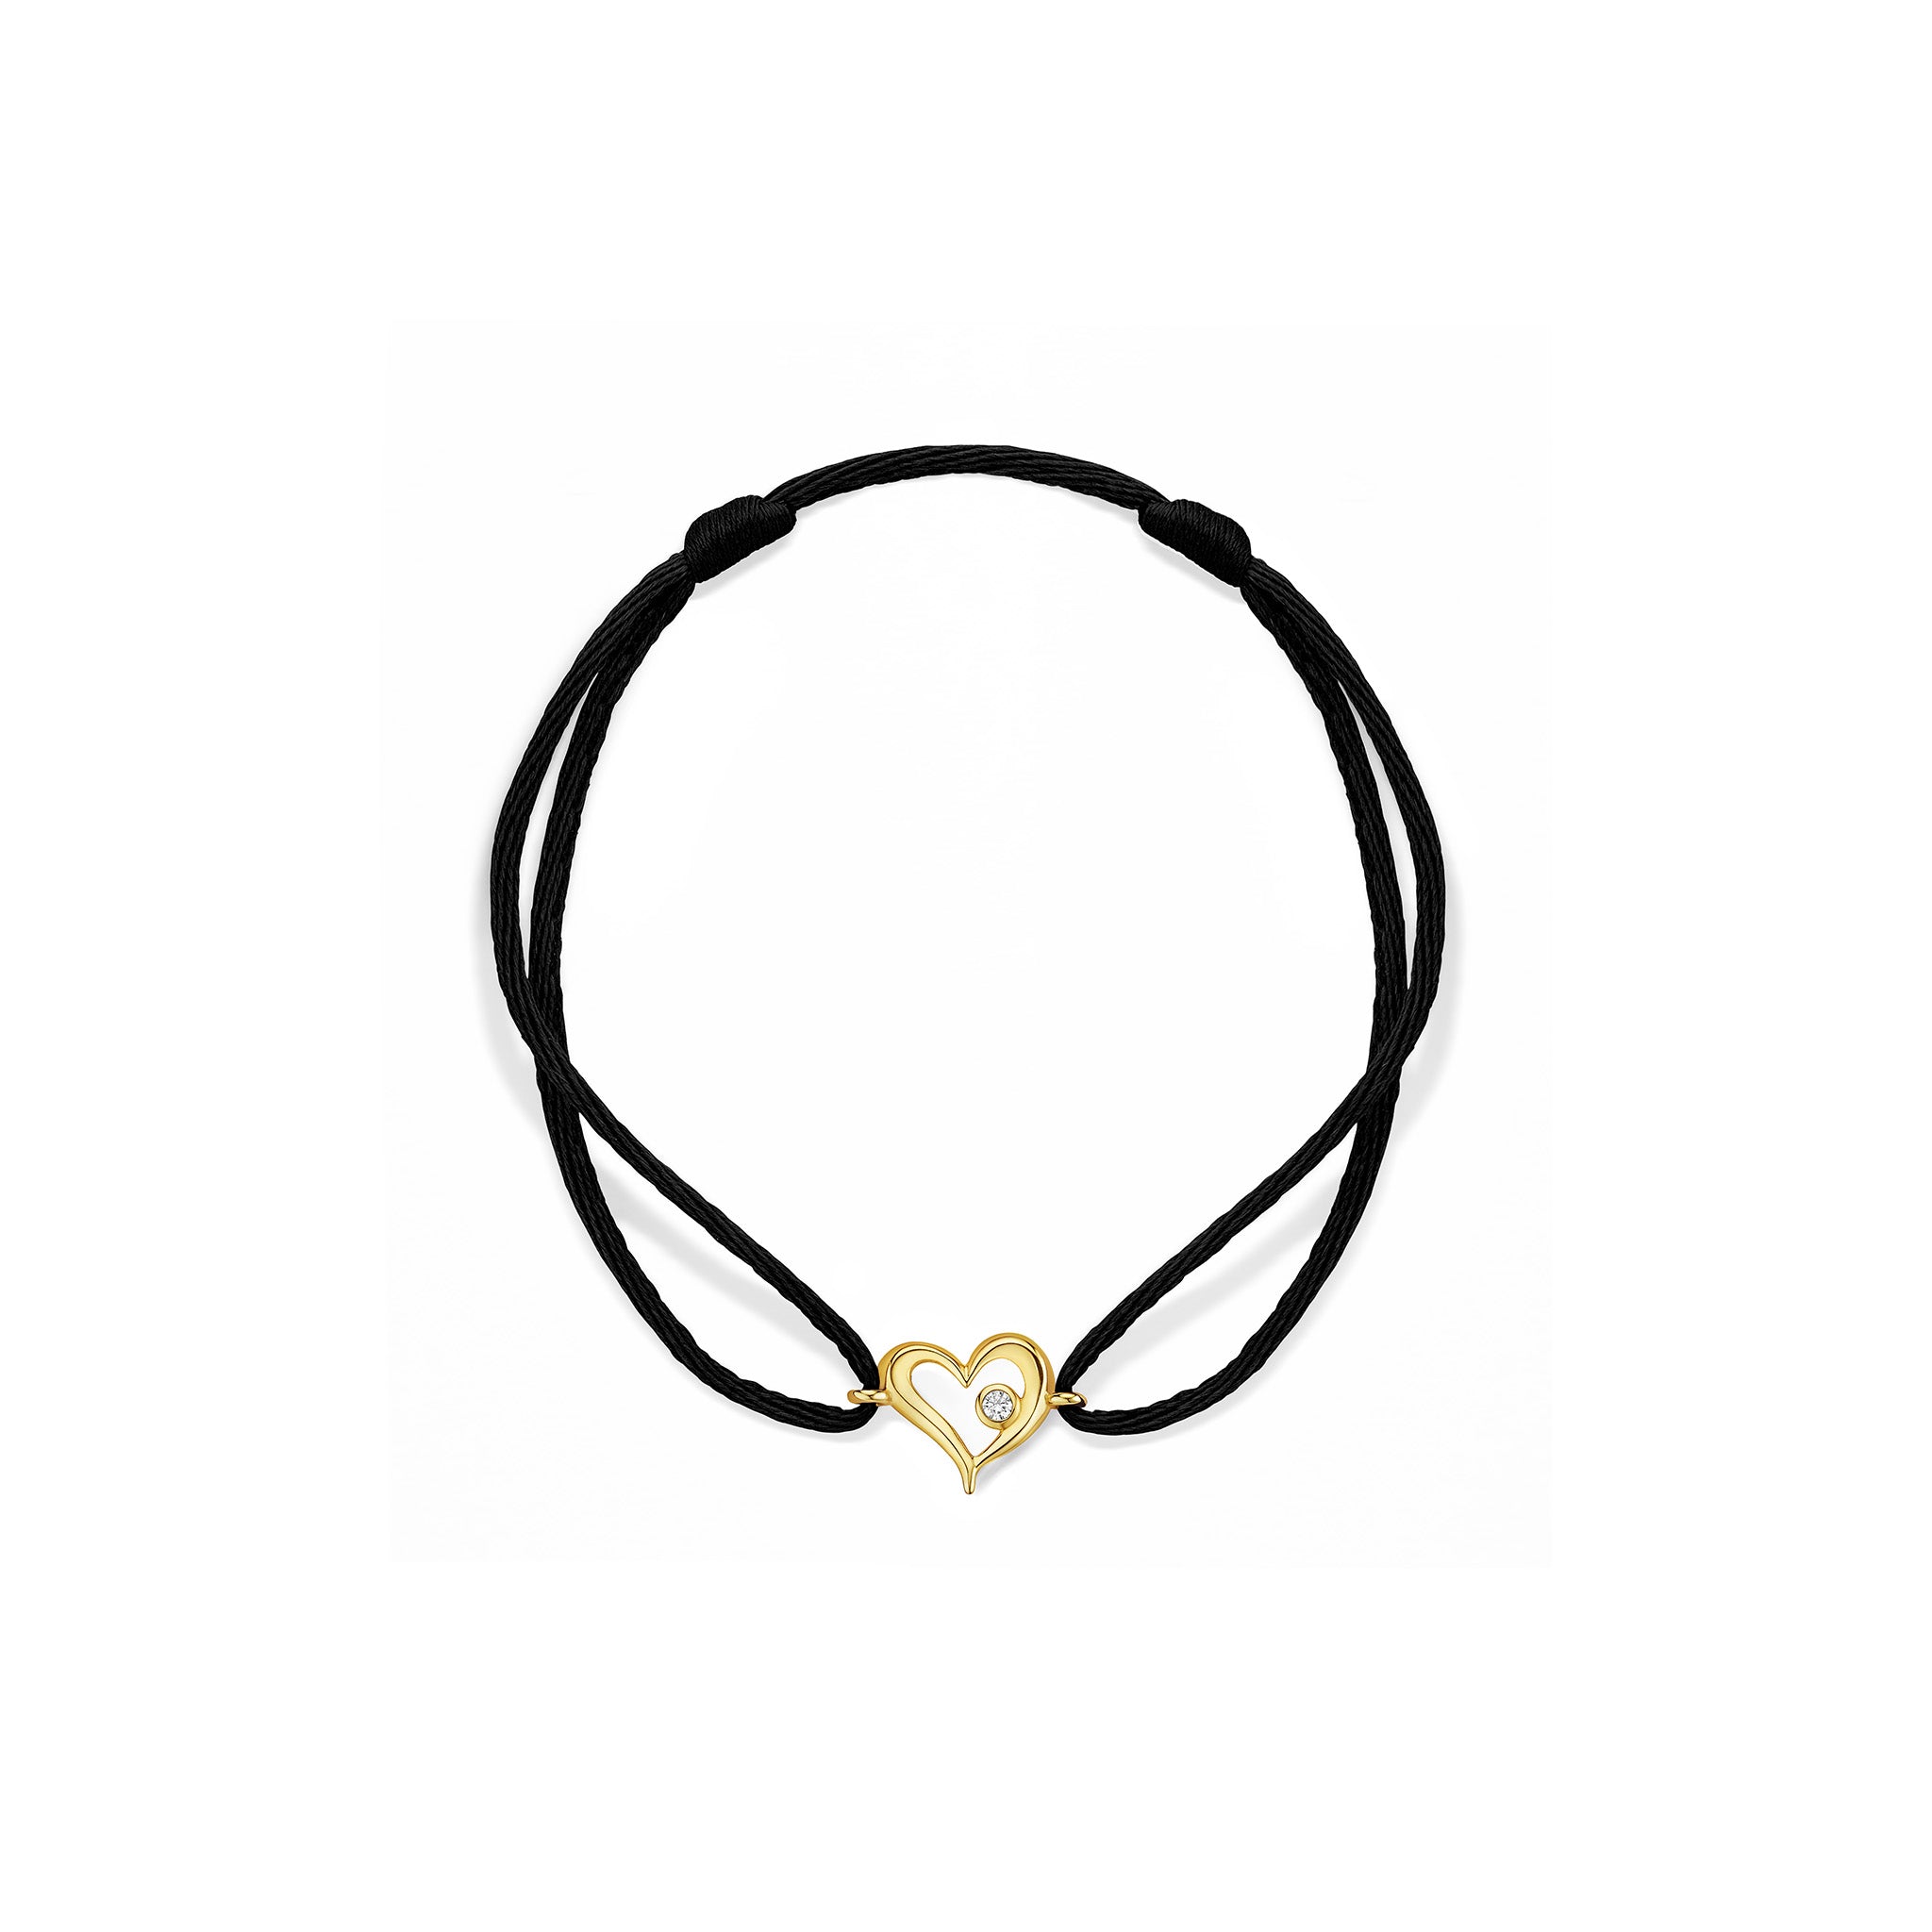 Eros Open Heart Black Cord Bracelet with Diamonds in 18K